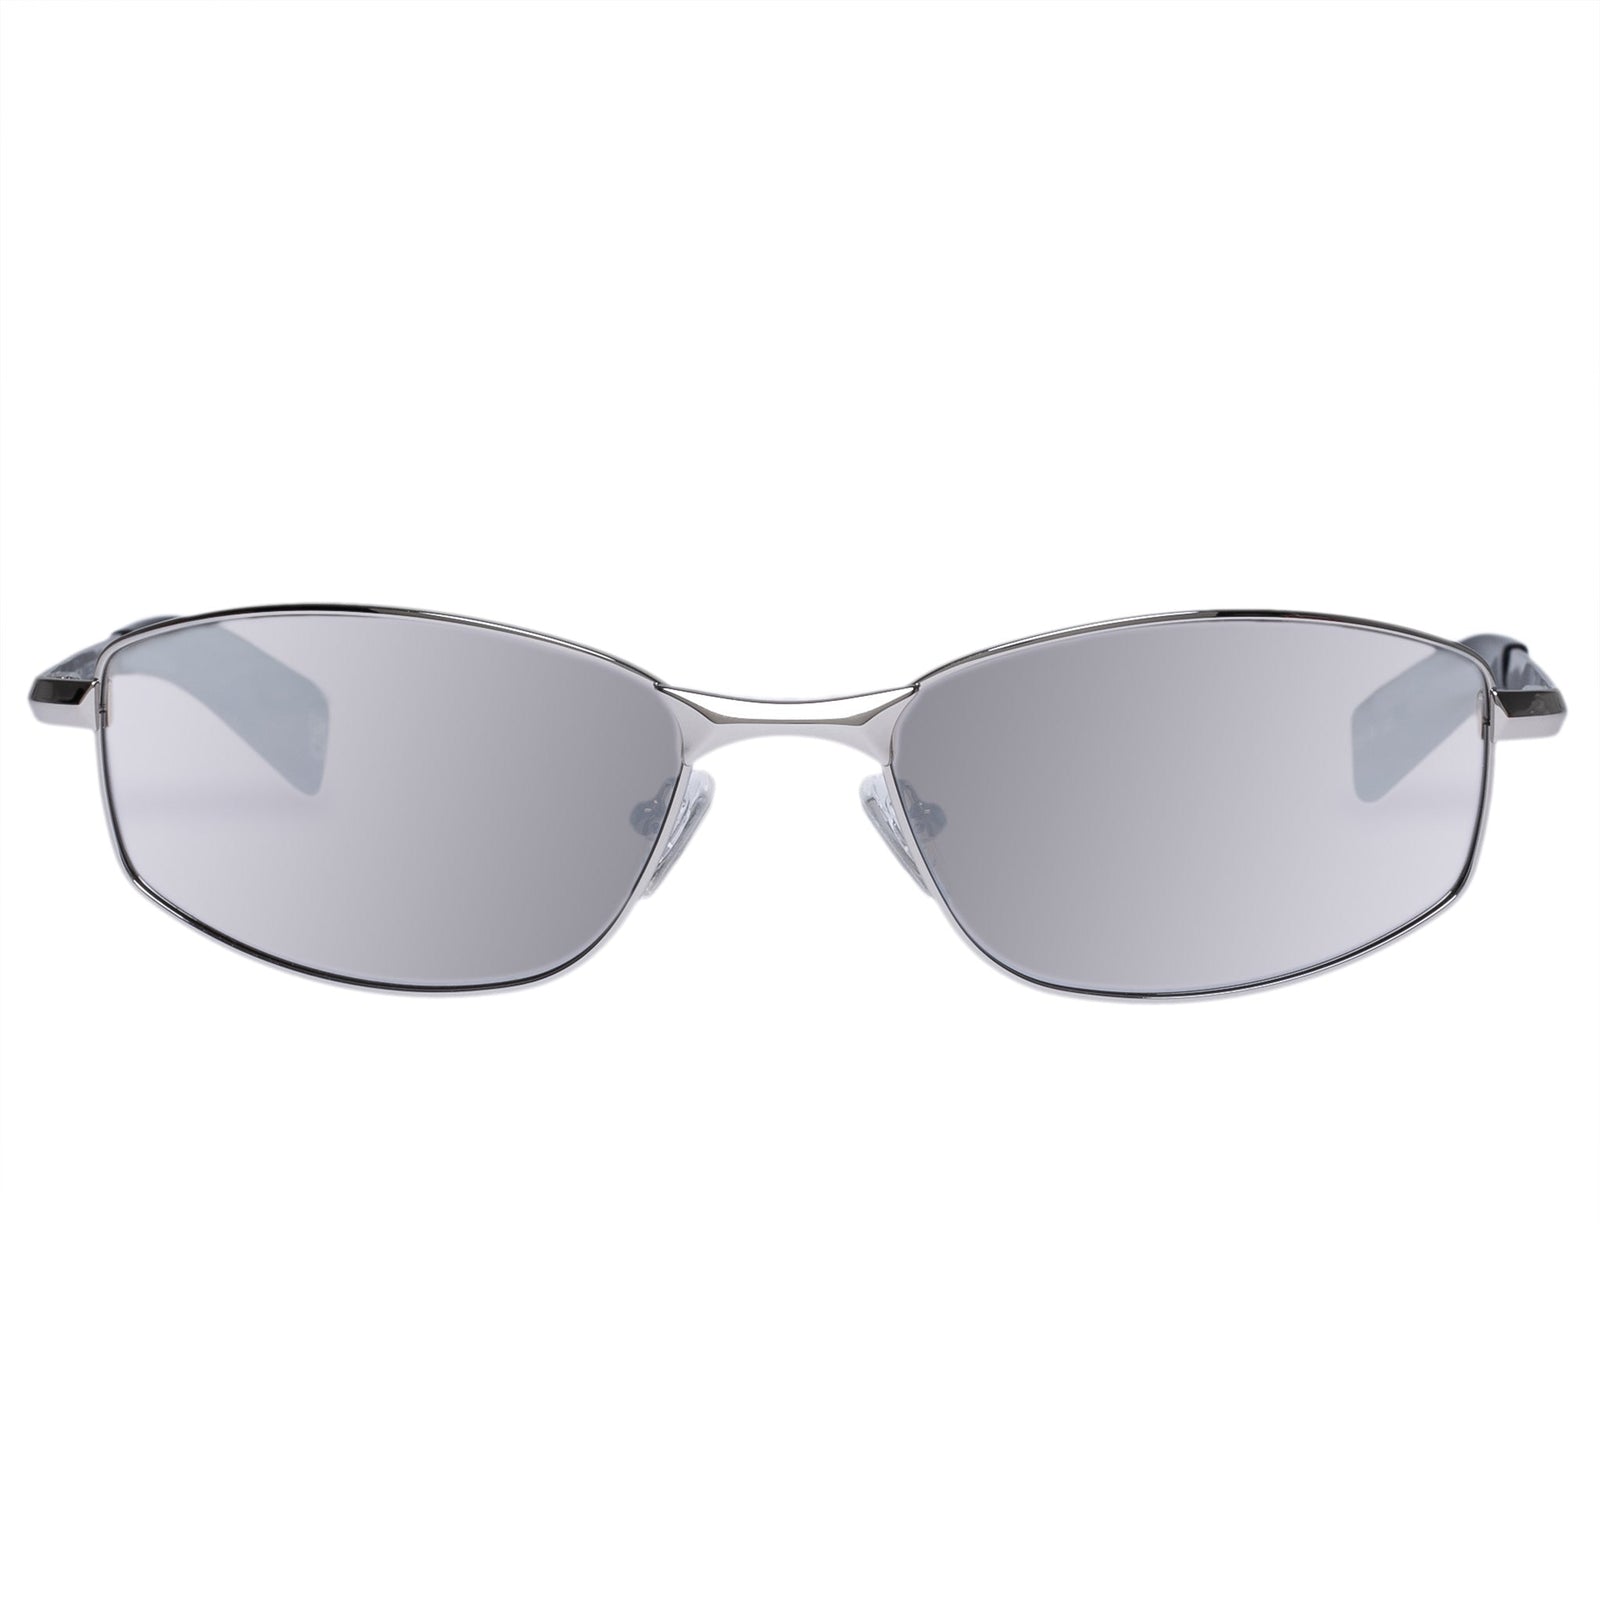 Star Beam Silver Uni-Sex Wrap Sunglasses